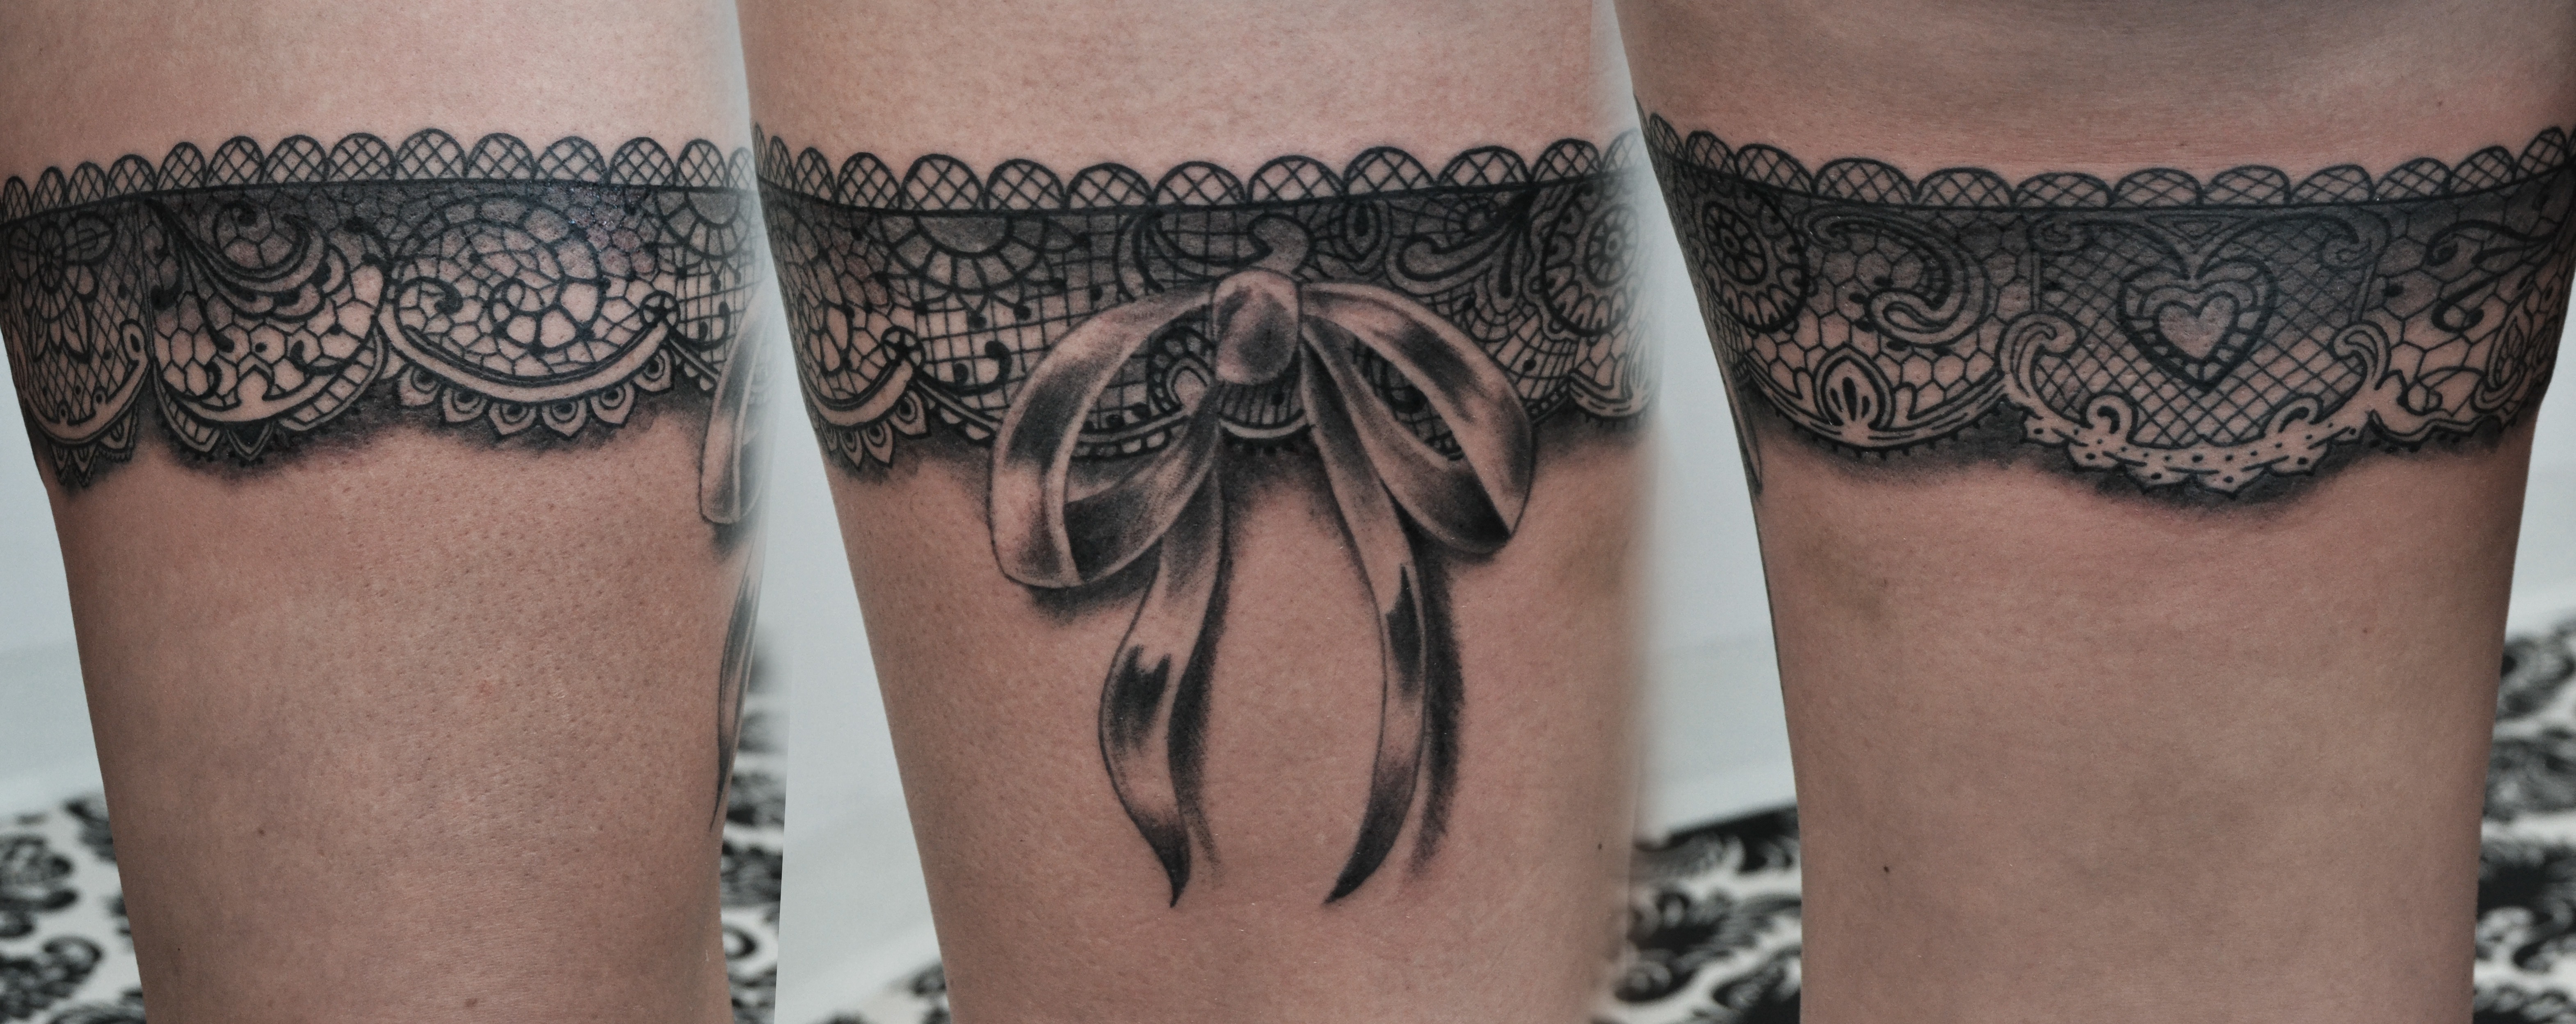 Tatouage noeud dentelle jarretière Studio Ster Tattoo